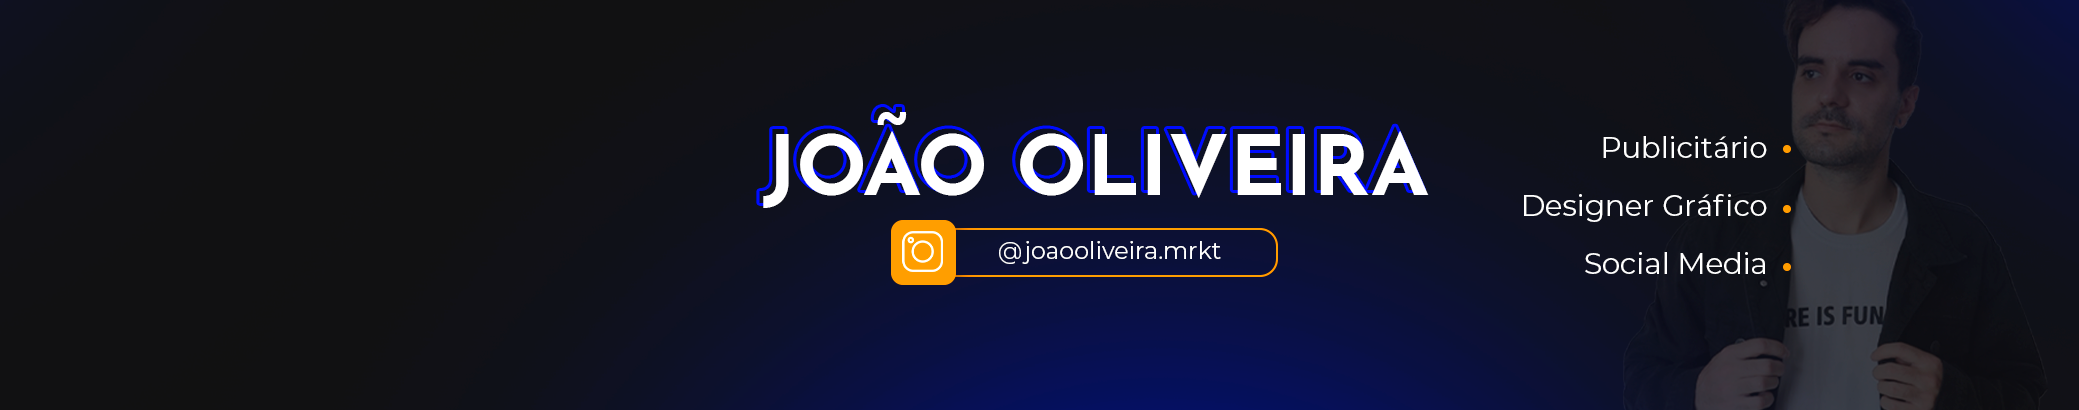 Joao Oliveira's profile banner